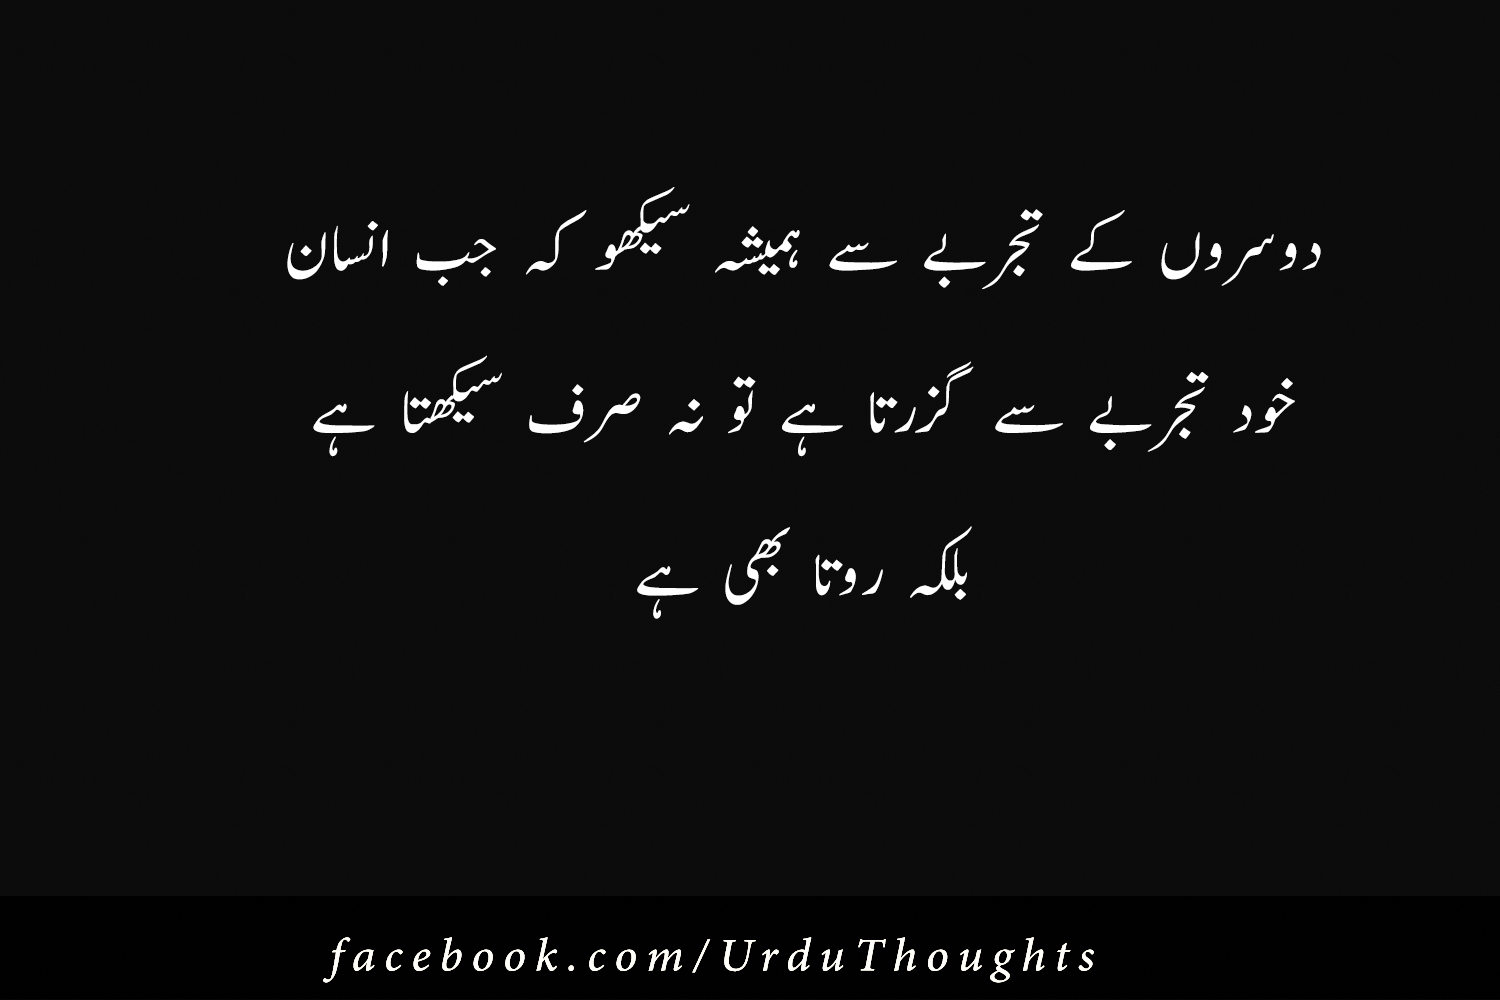 Sad Happy Inspirational Urdu Quotes Wallpapers Urdu Thoughts